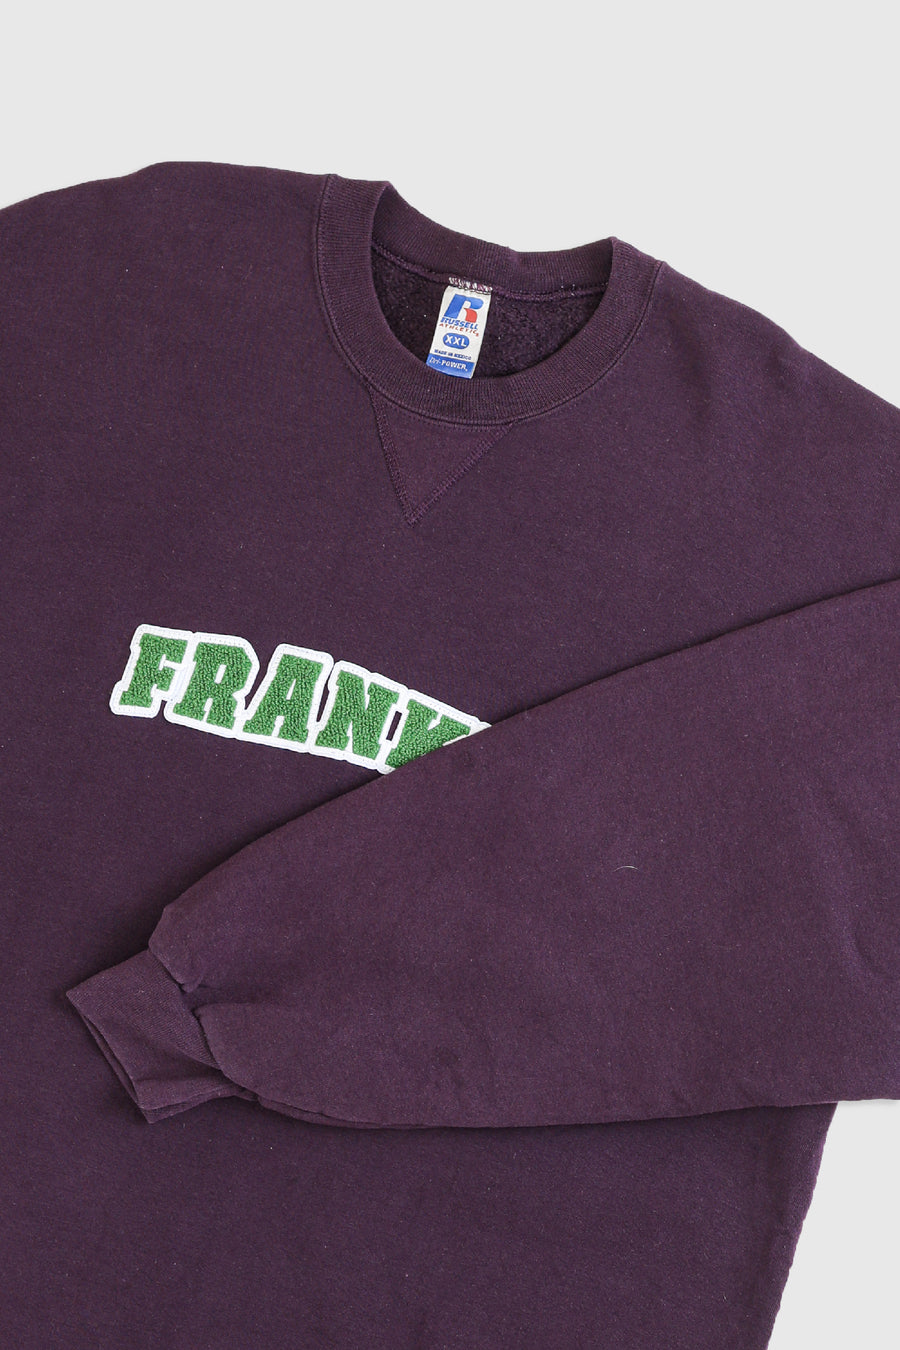 Frankie Upcycled Varsity Sweatshirt